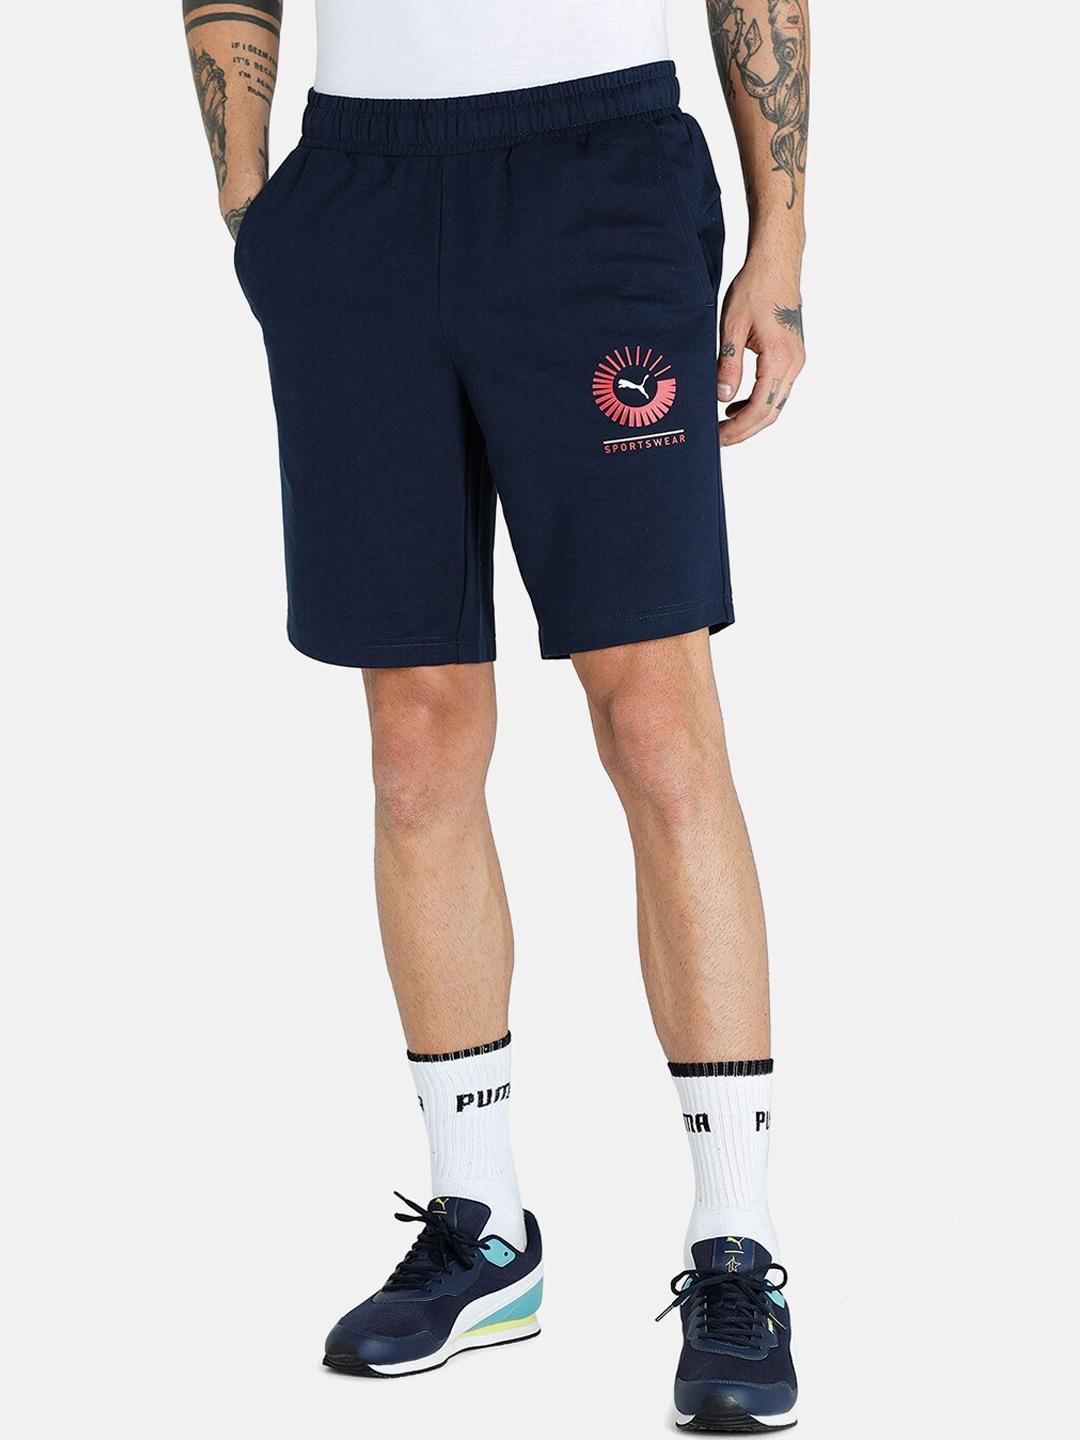 puma-men-navy-blue-slim-fit-sports-shorts